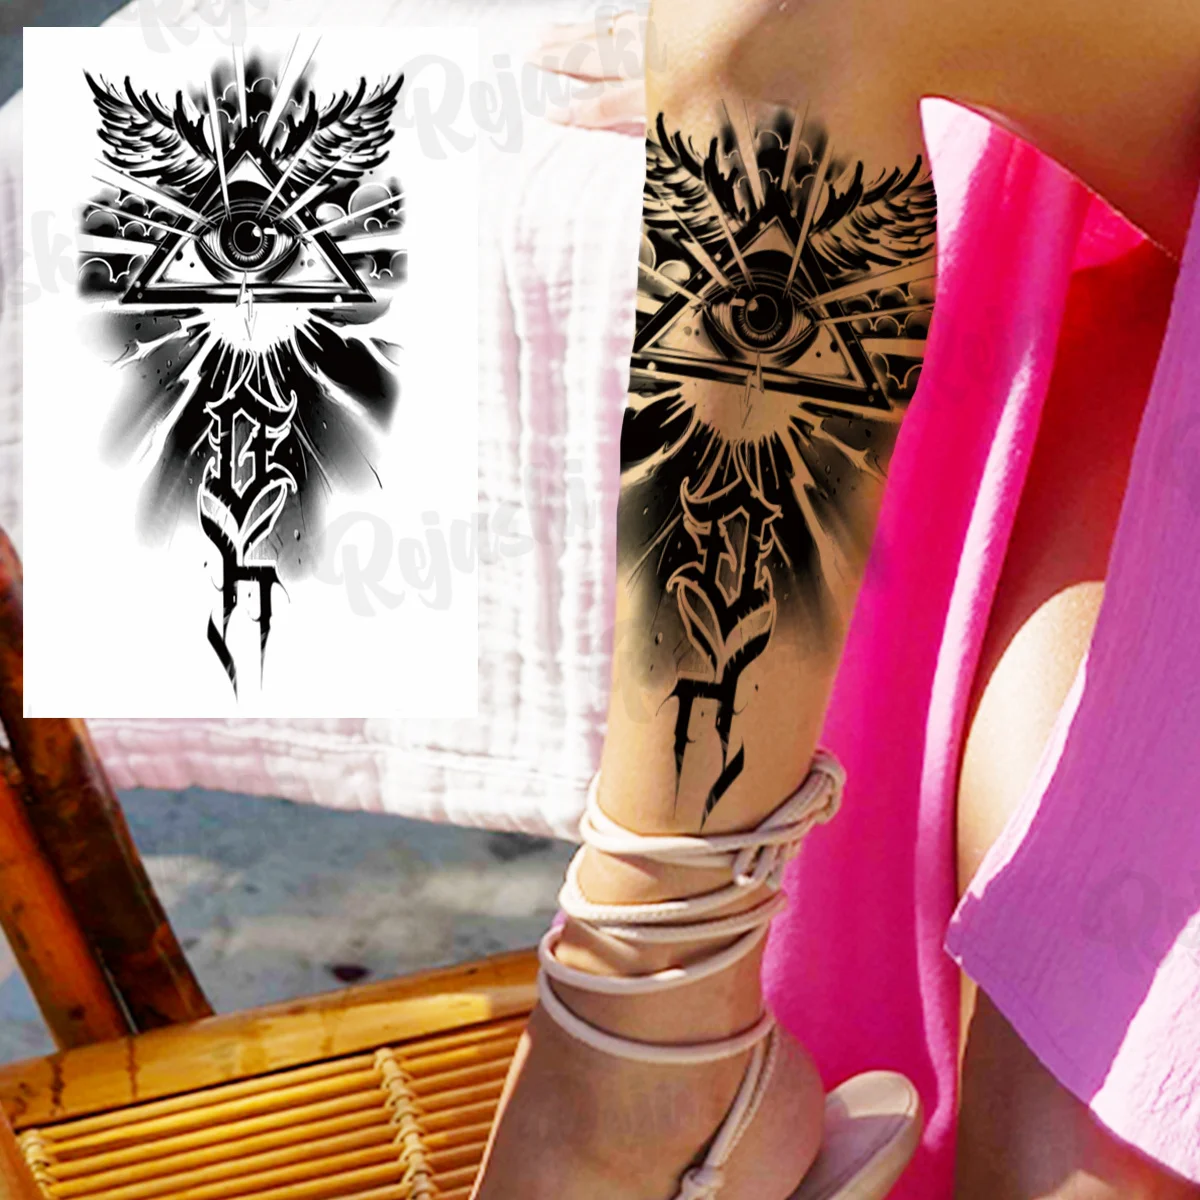 Black Maori Thorns Temporary Tattoos For Men Adults Realistic Totem Compass Rose Flower Eye Fake Tattoo Sticker Arm Leg Tatoos images - 6